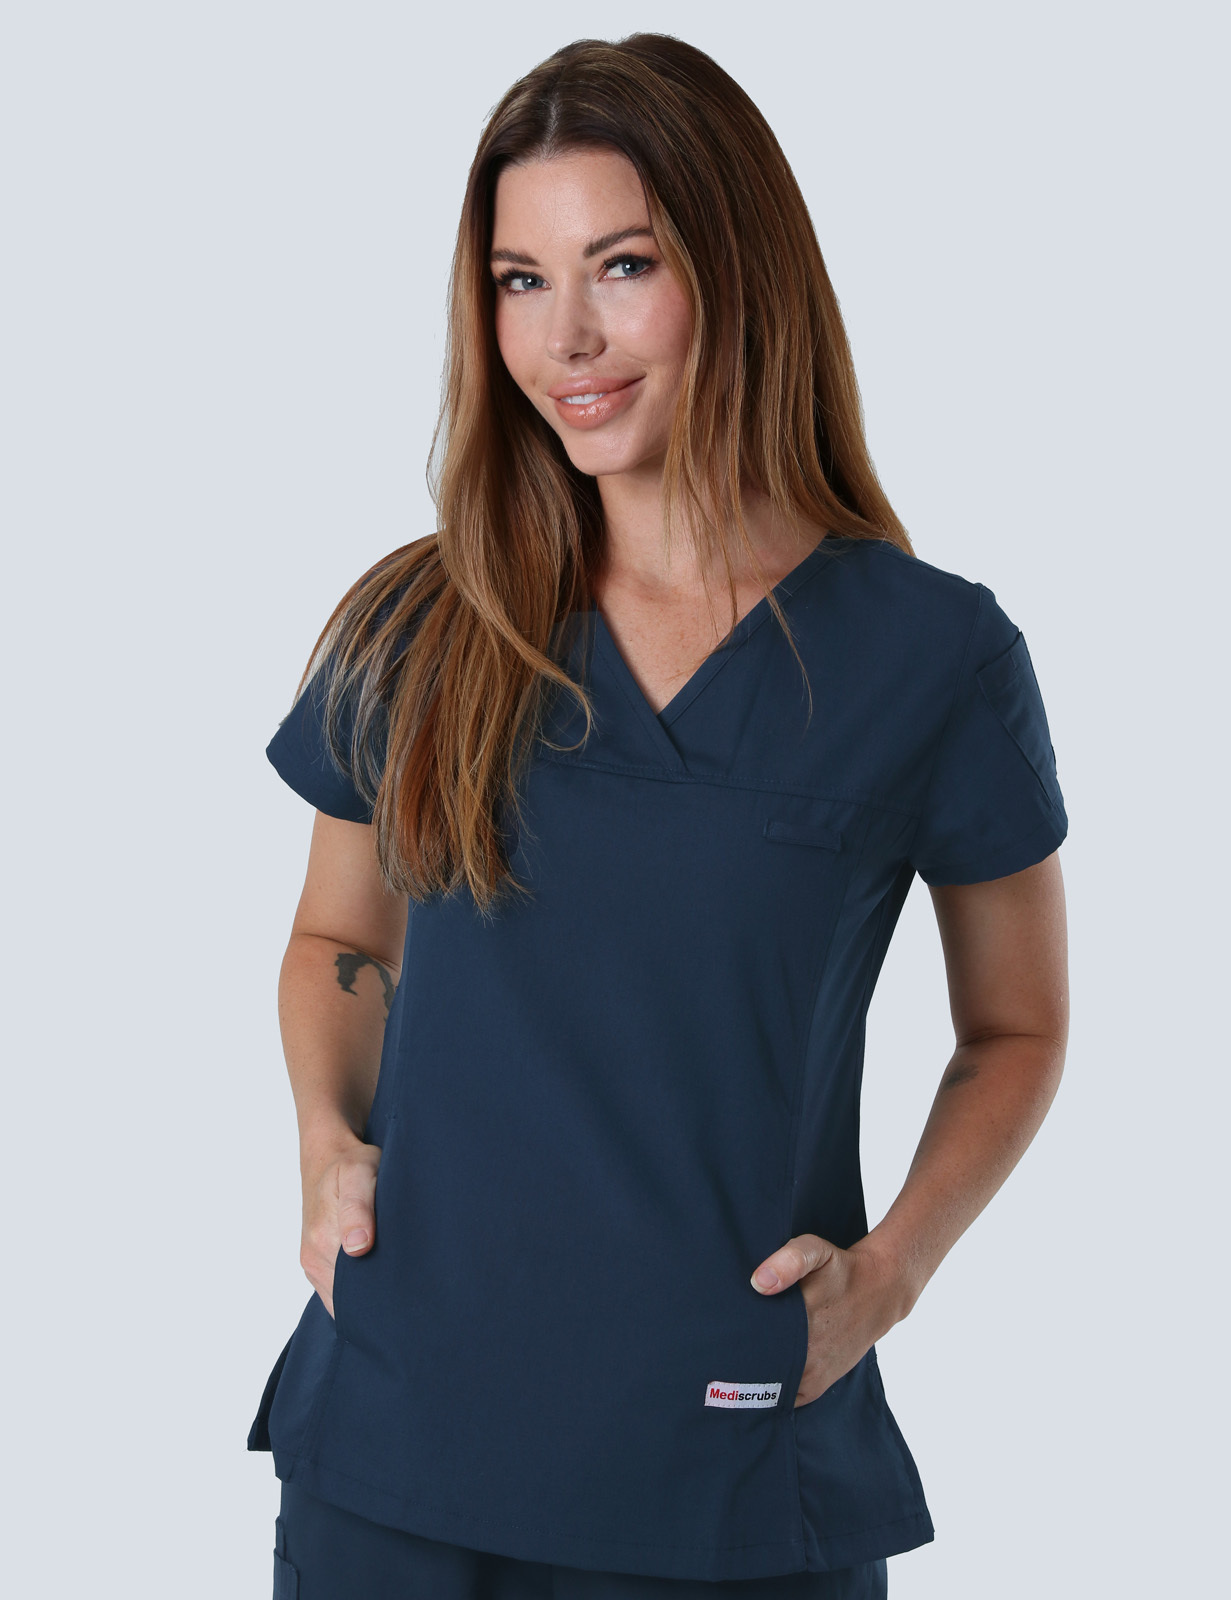 Monash Health Women's Midwife Uniform Set Bundle (Women's Fit Solid Scrub Top and Cargo Pants in Navy + Logo)